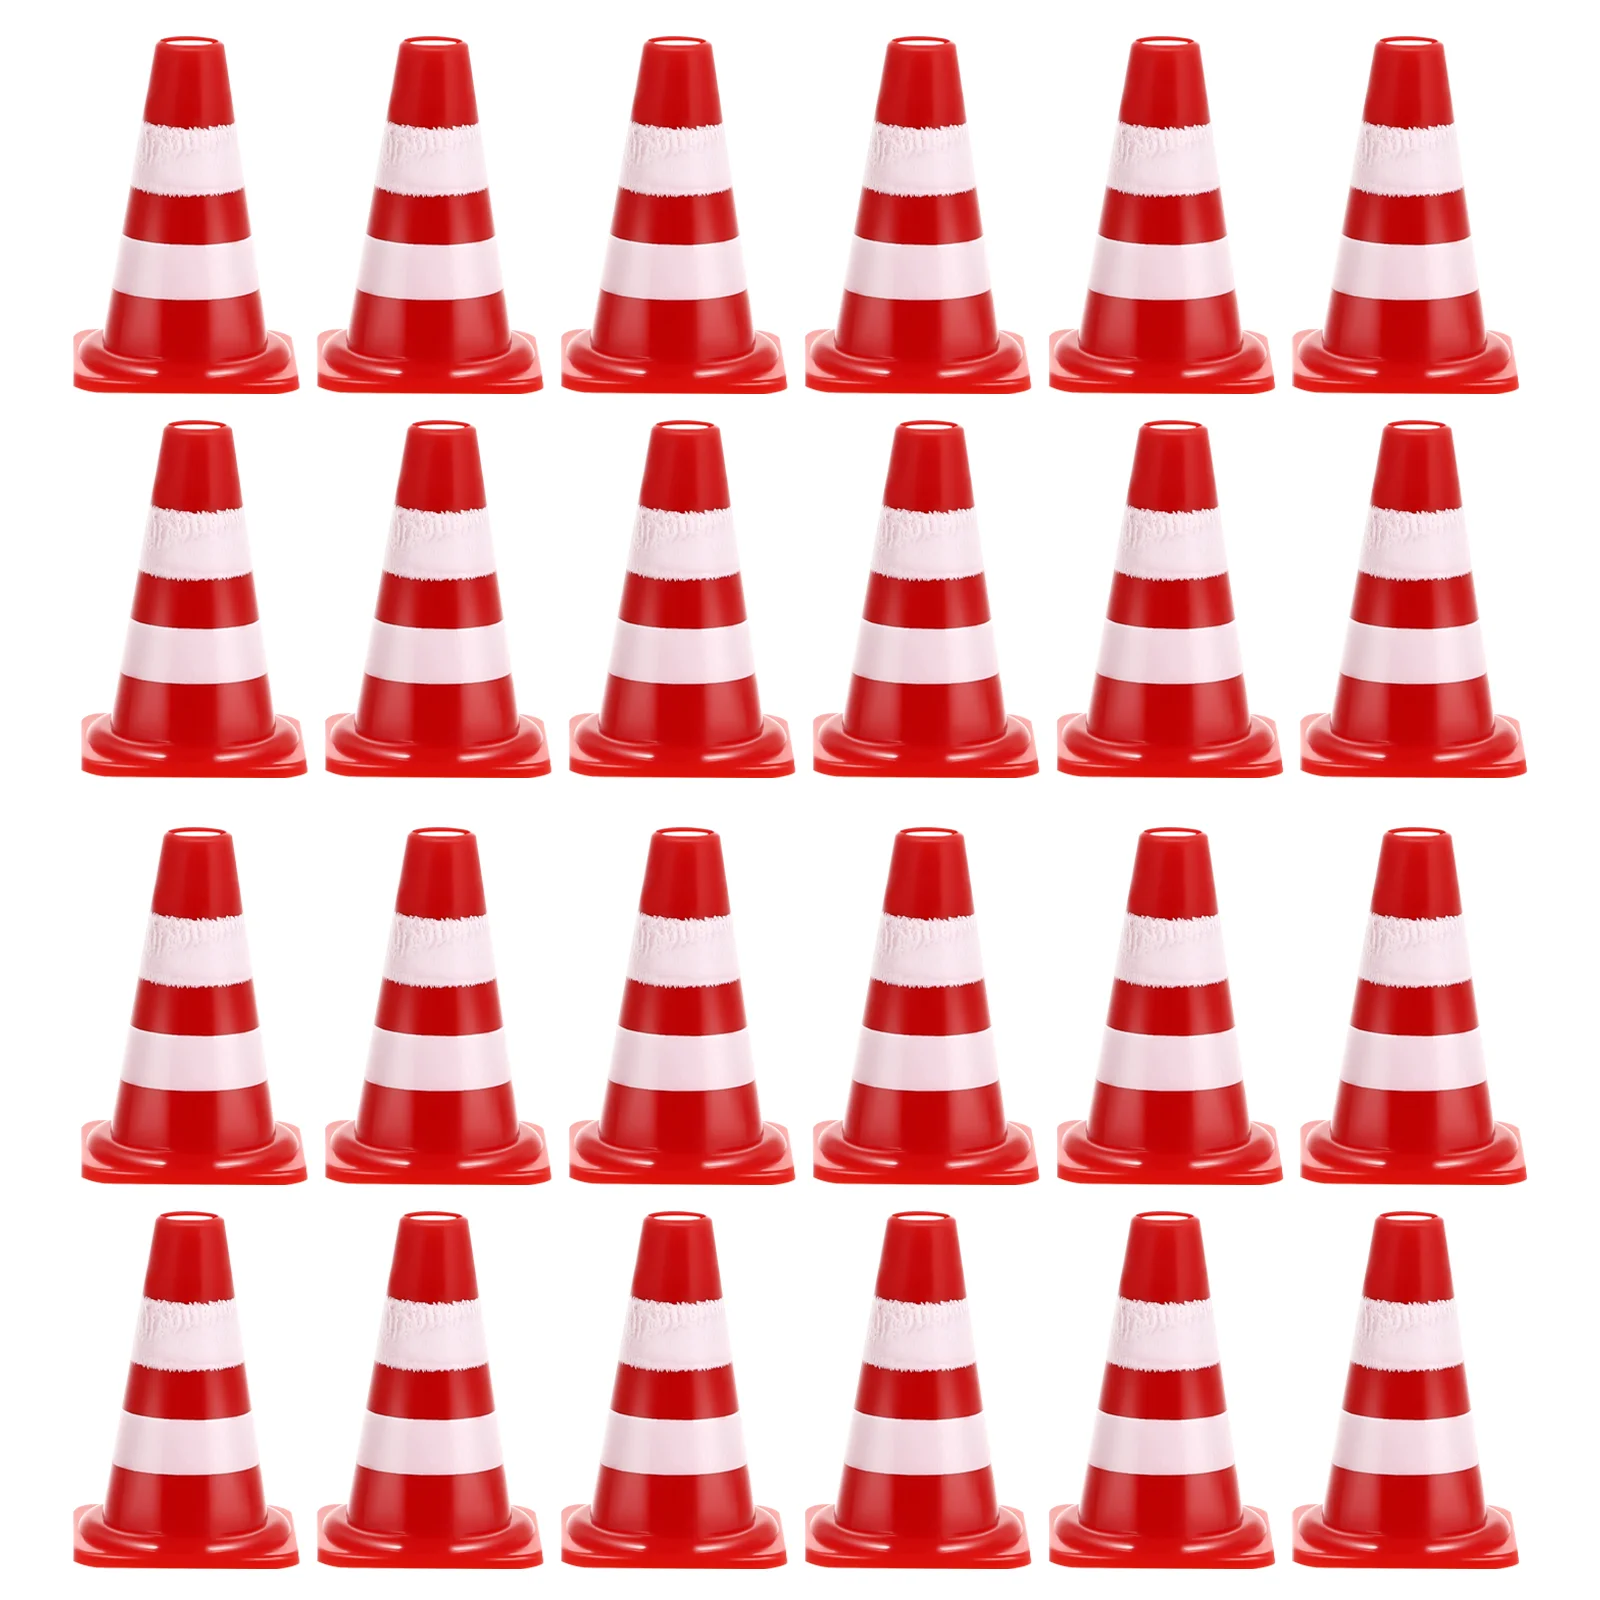 

Mini PlasticTraffic Cones Sport Training Roadblock Mini Traffic Signs Roadblock Toy for Kids Construction Car Theme Party